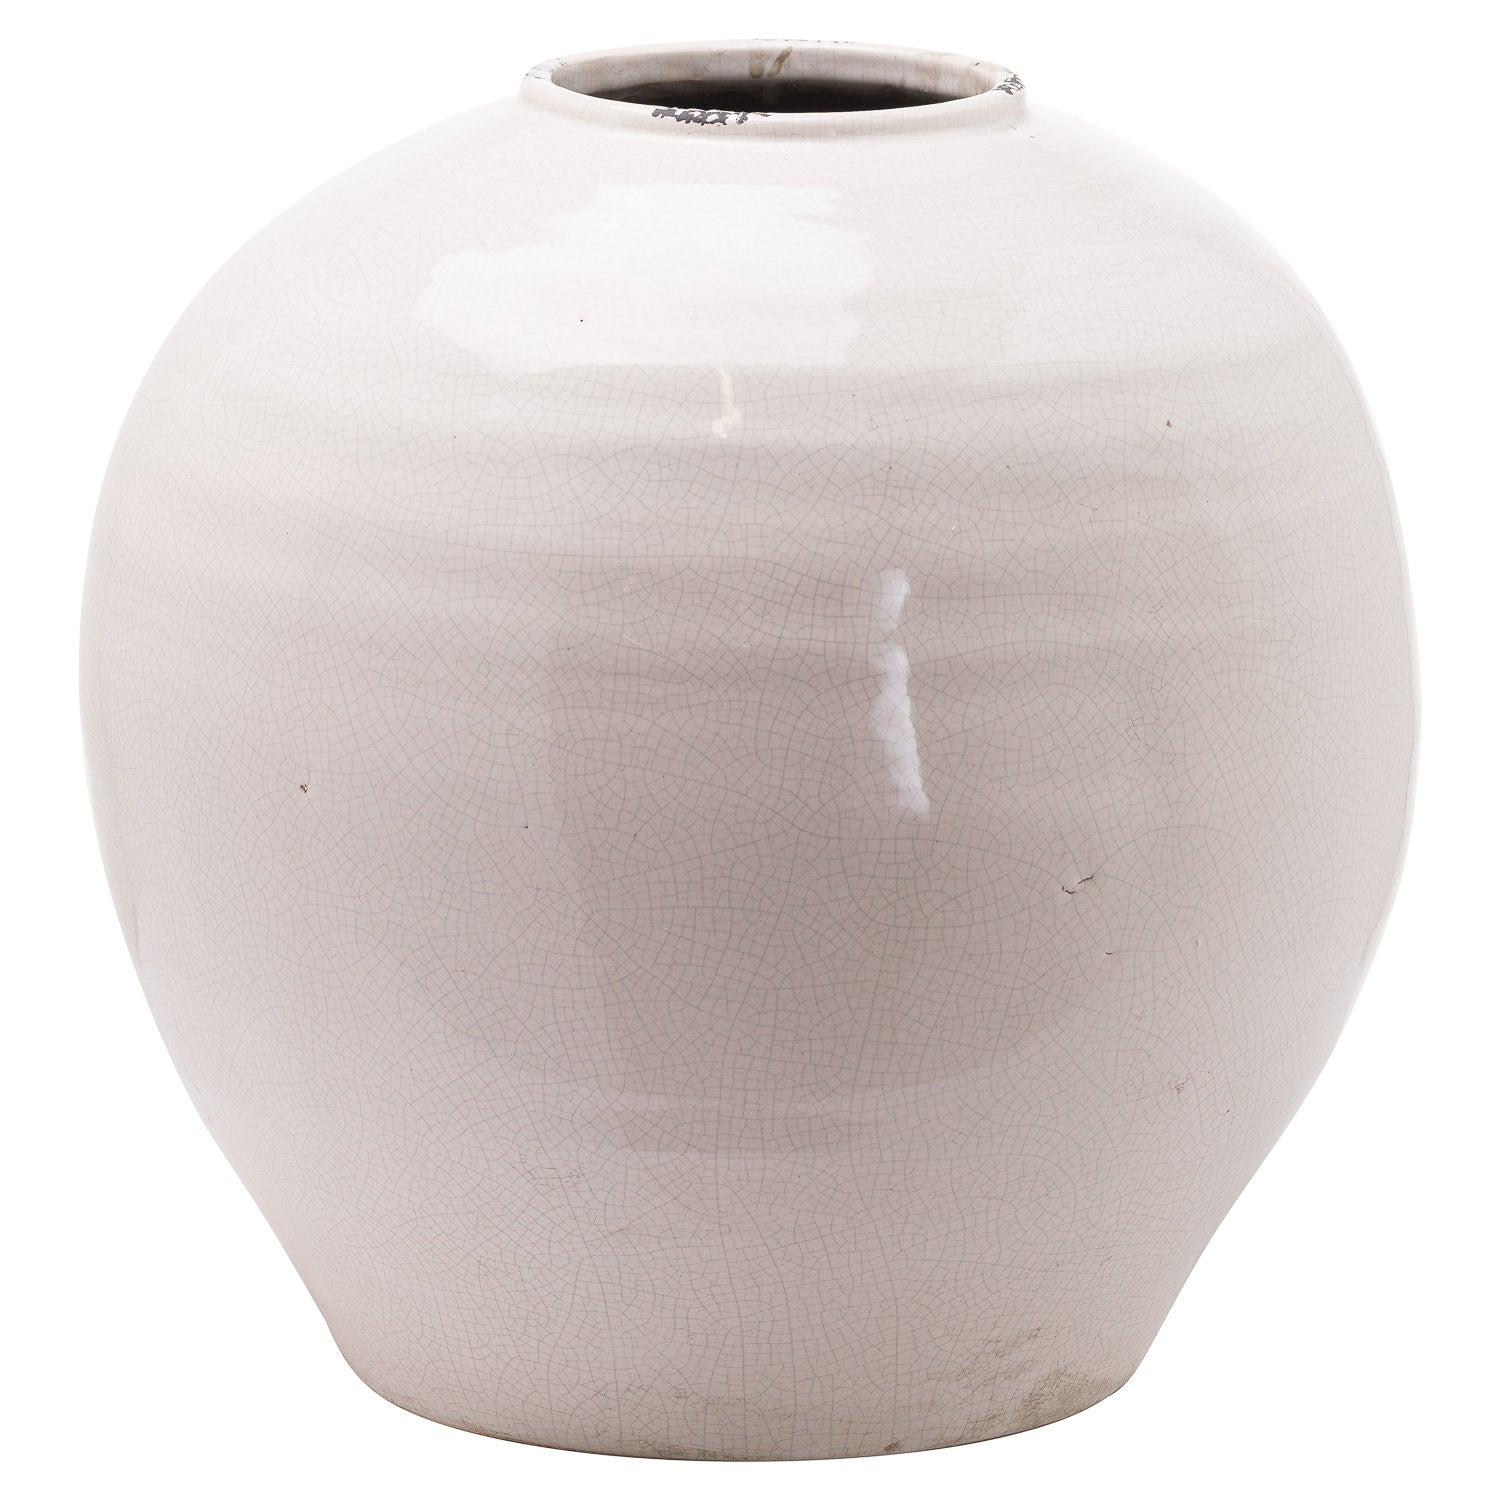 View Garda Glazed Large Regola Vase information